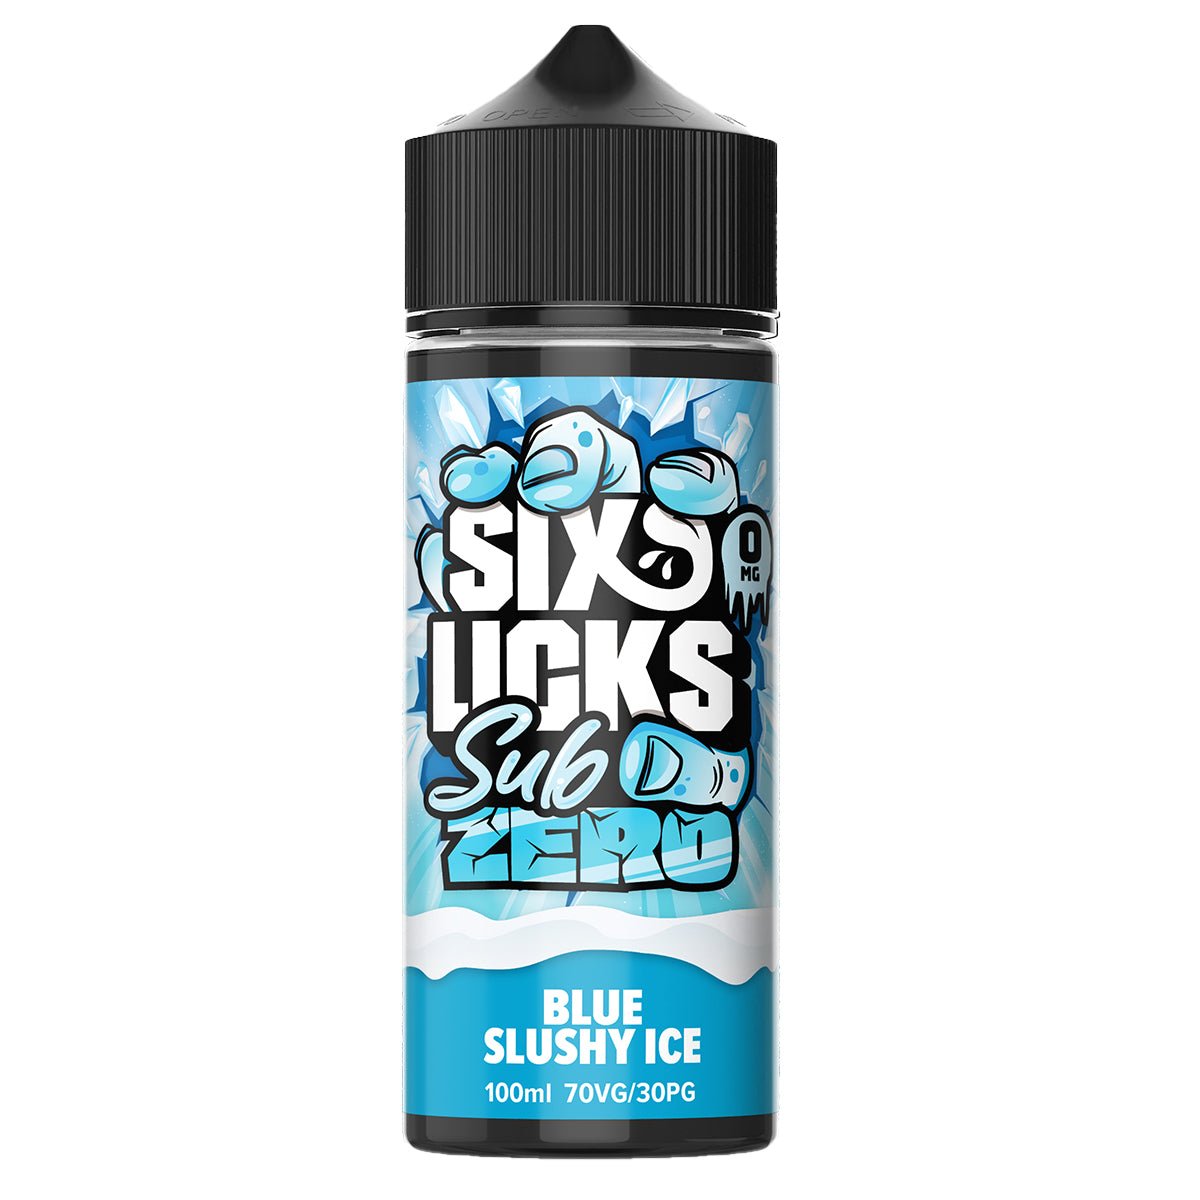 Blue Slushy Ice Sub Zero 100ml Shortfill By Six Licks - Prime Vapes UK